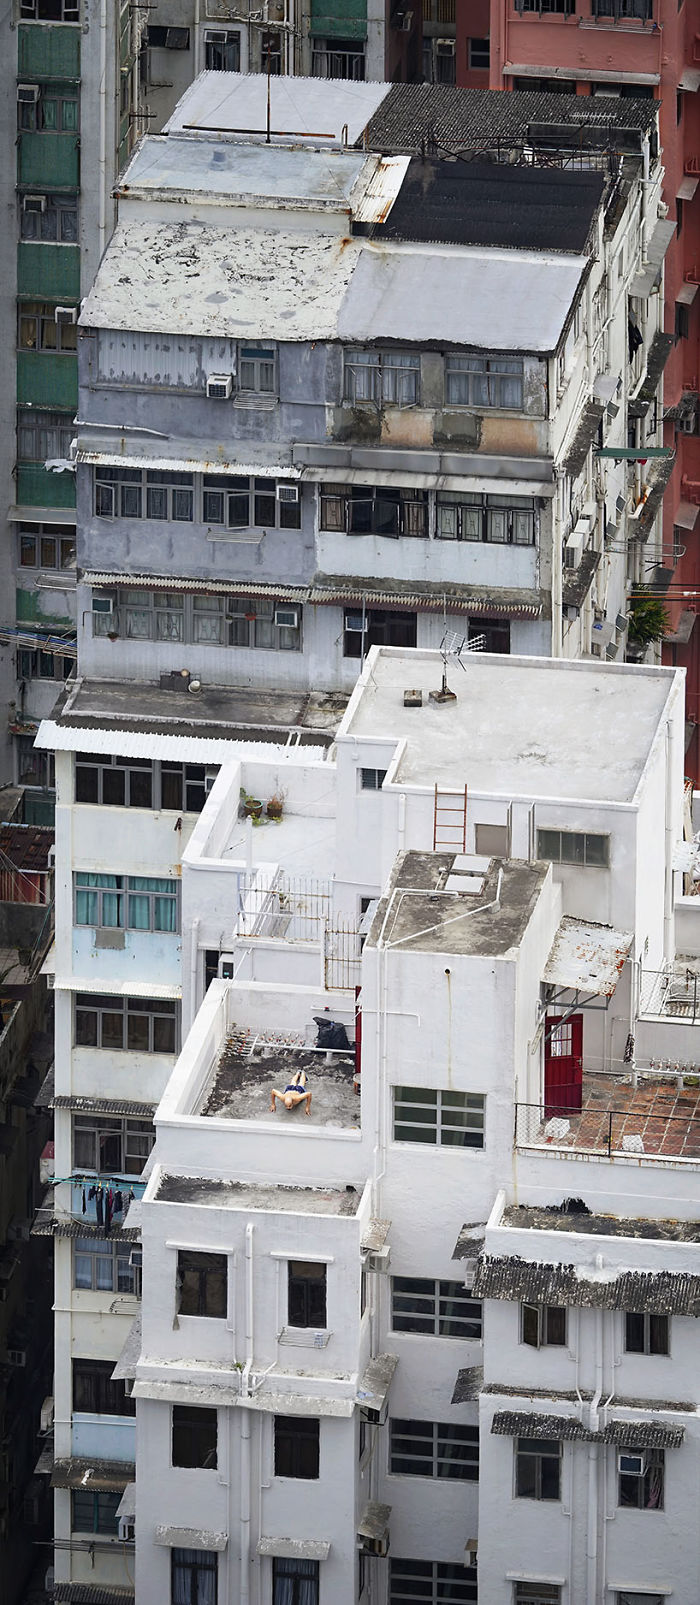 5ae2eb0b1ea30 Pushing Up 5adef90d676eb  700 - 12 coisas interessantes este fotógrafo capturado nos telhados de Hong Kong